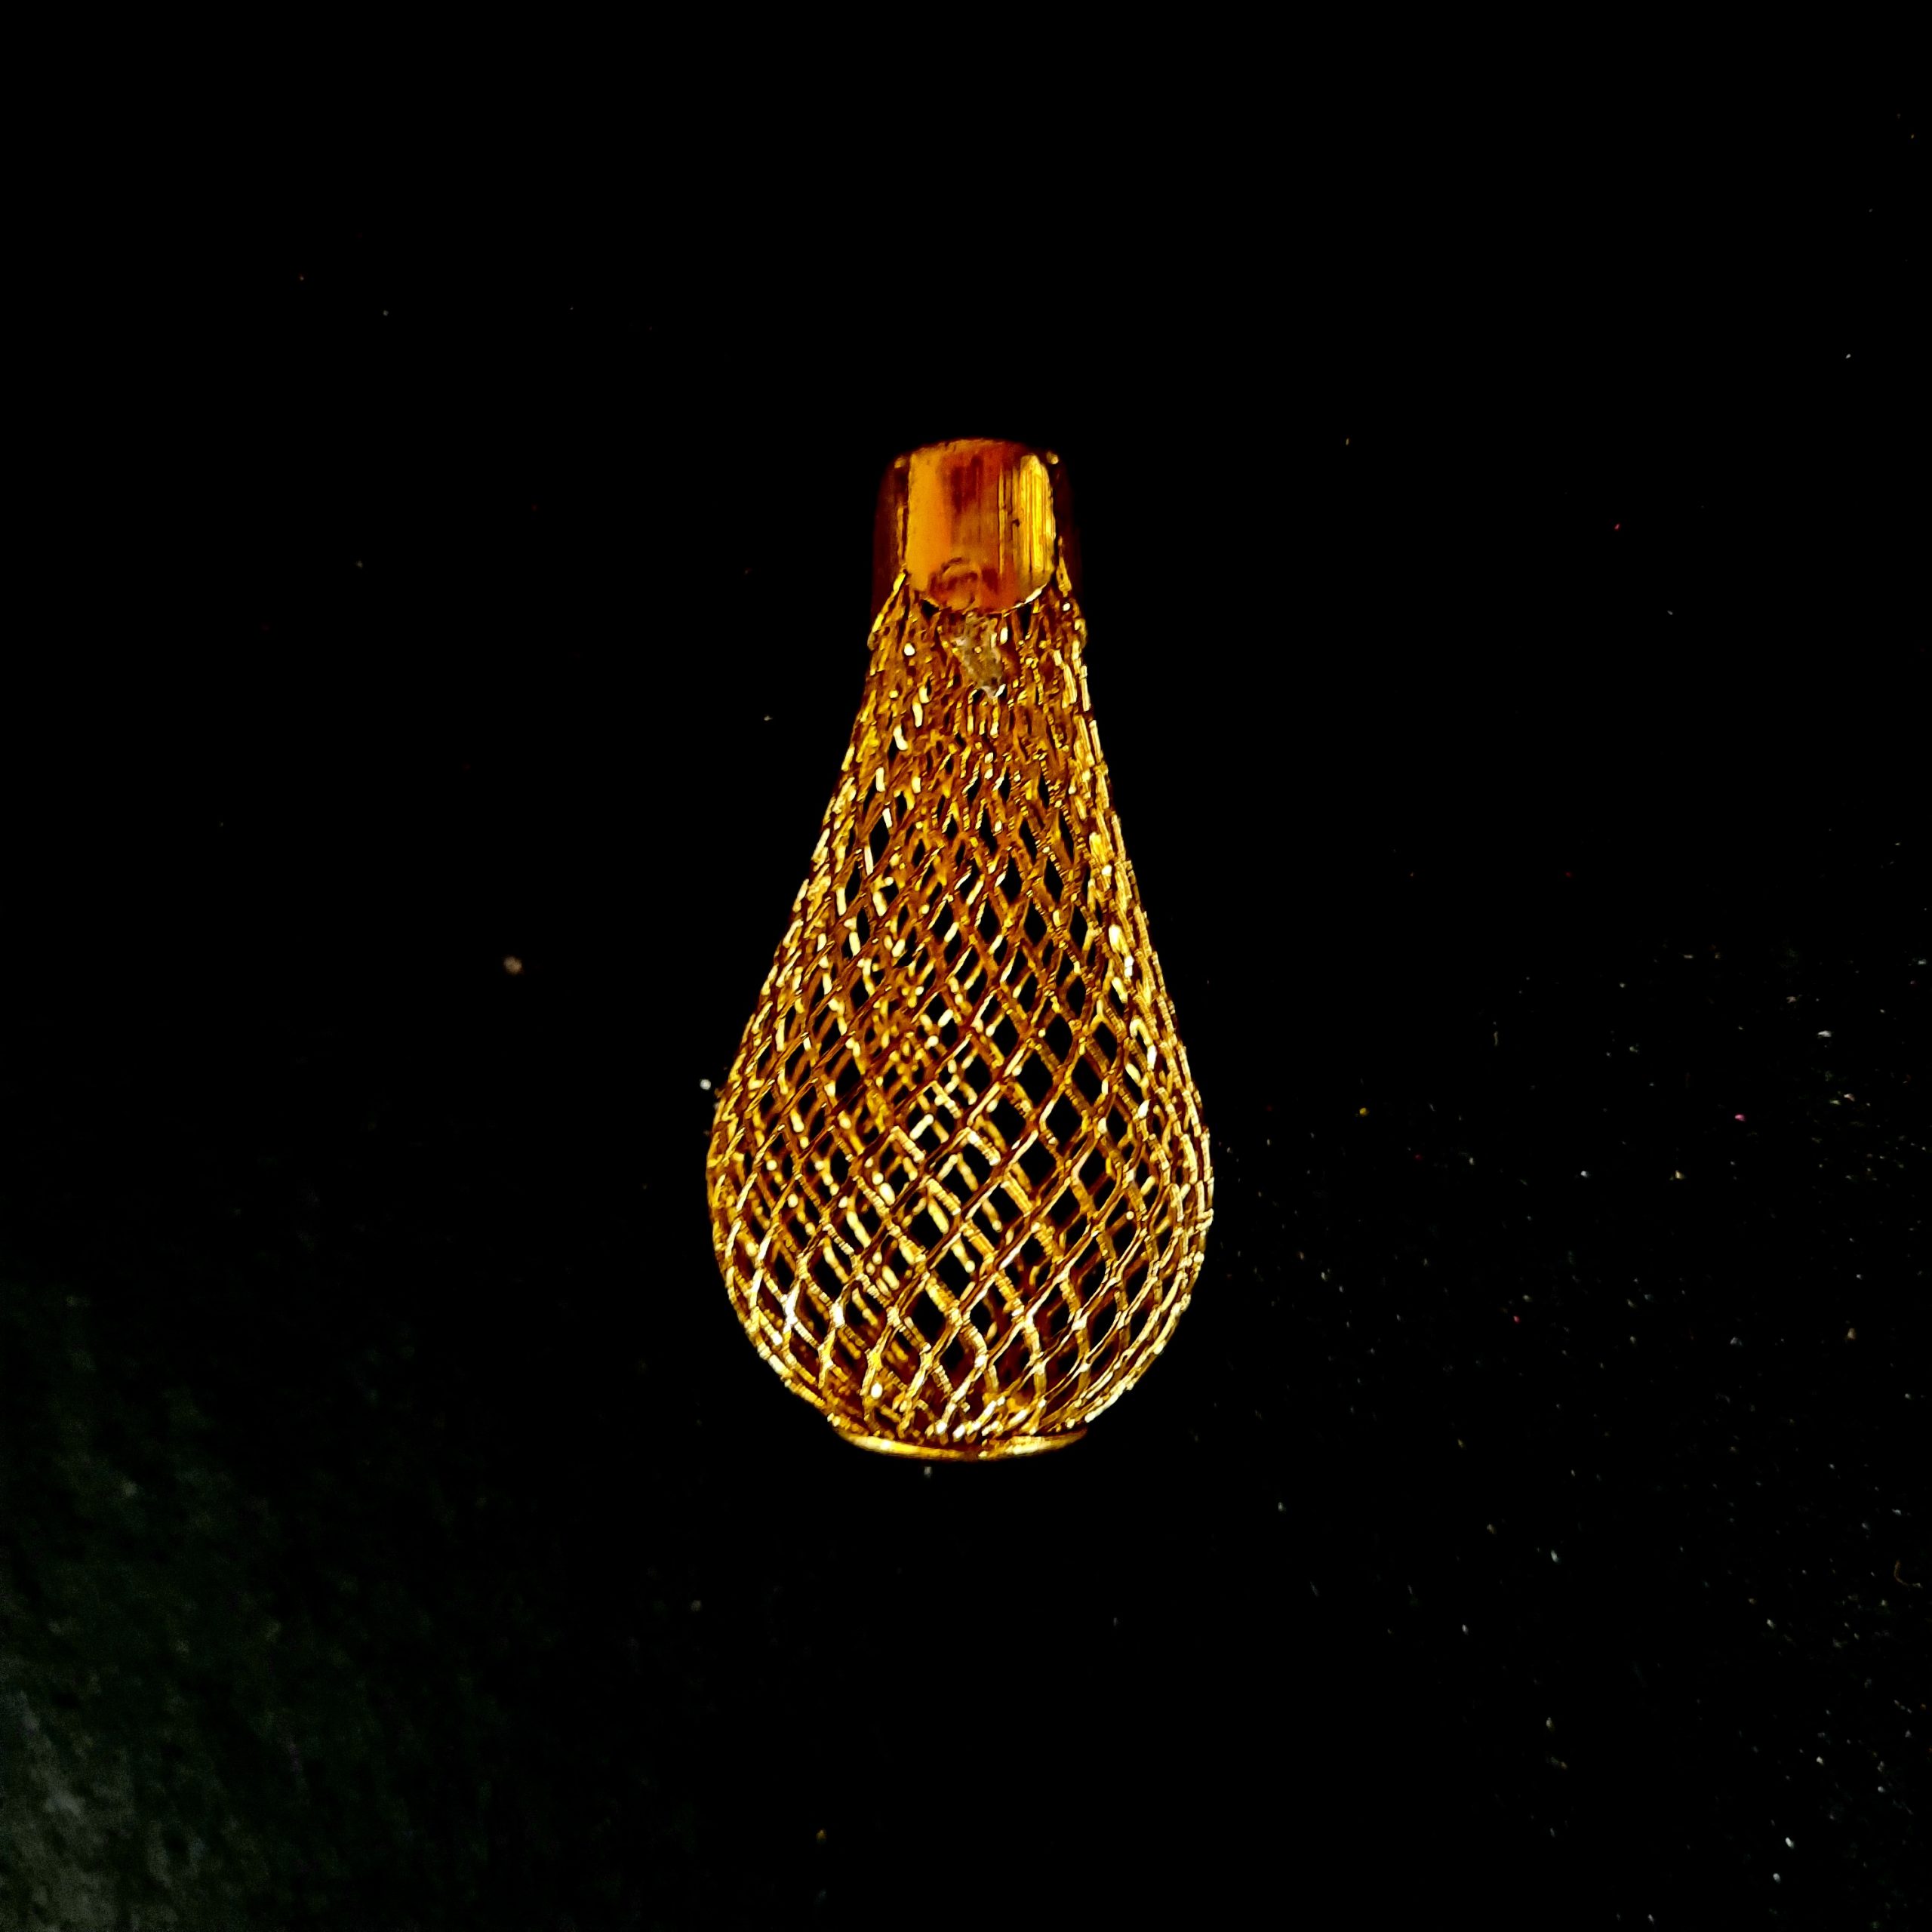 A metallic bulb